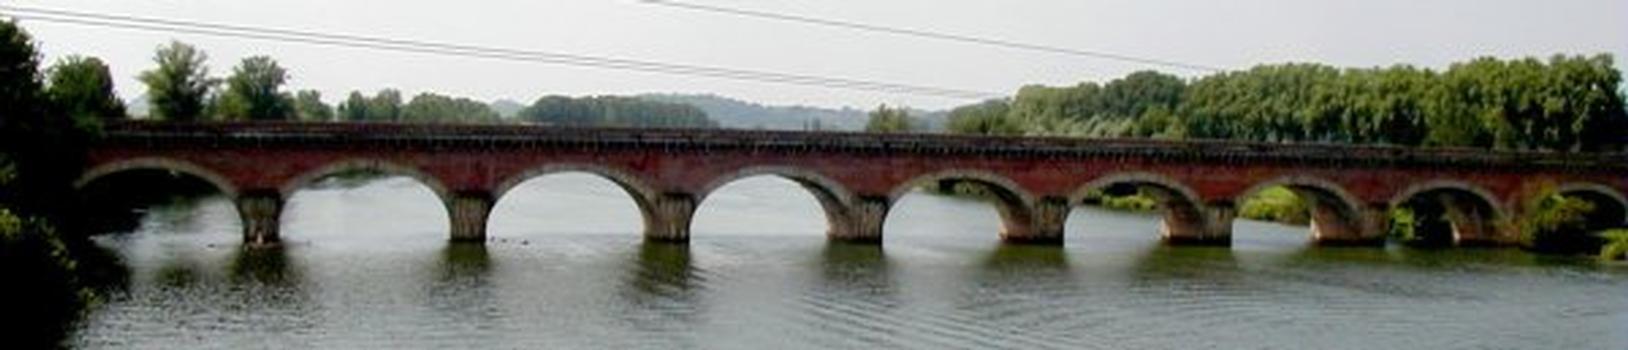 Cacor Canal Bridge at Moissac